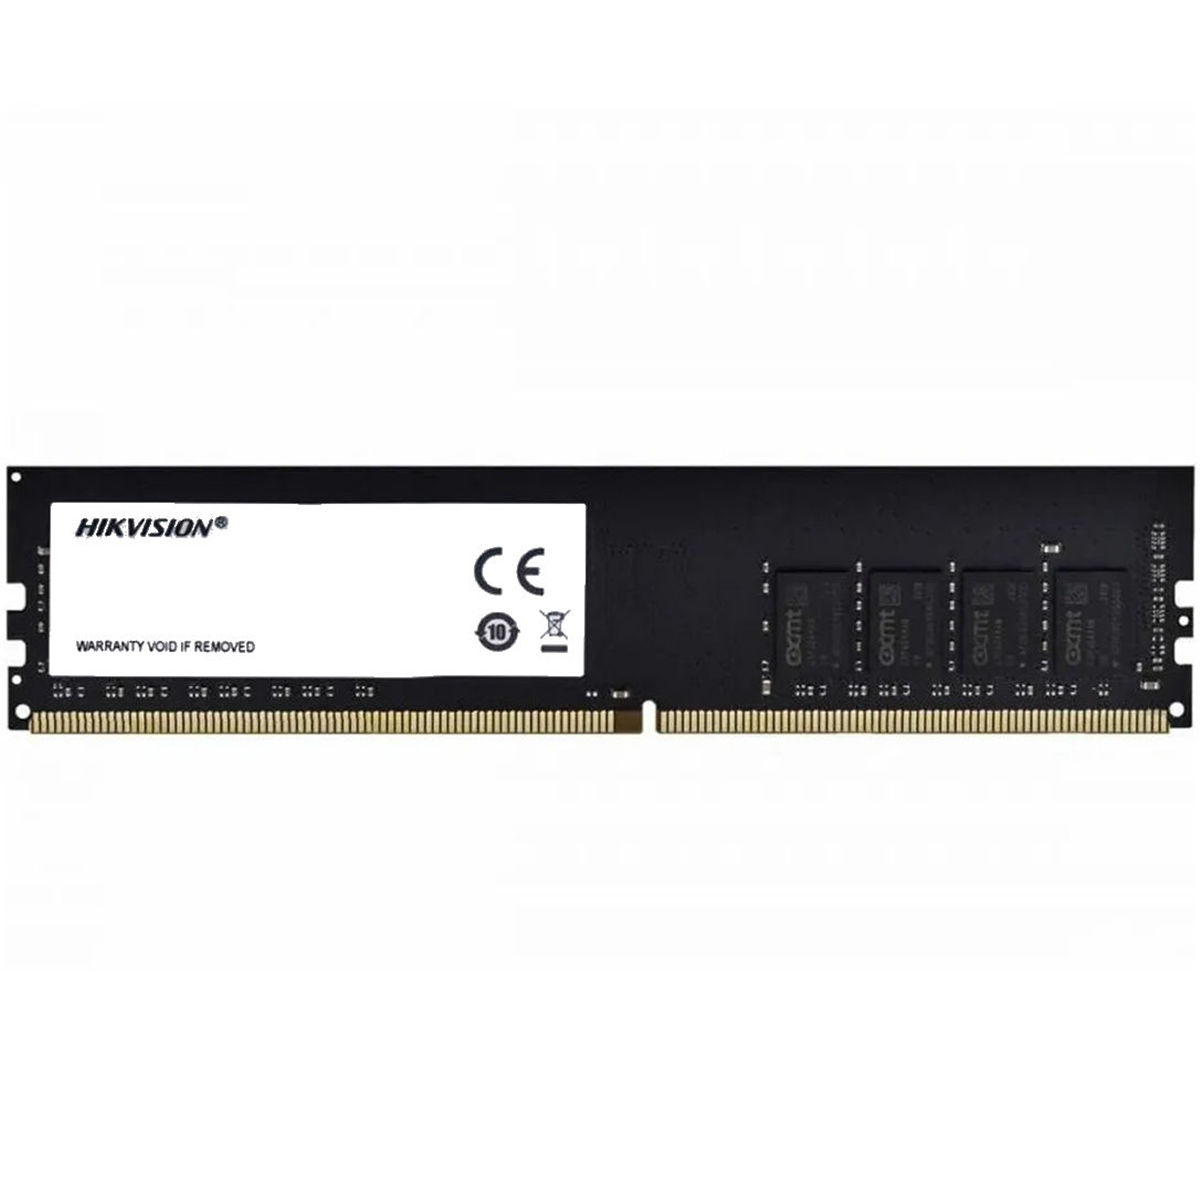 Memoria RAM DDR3 Hikivision 8Gb 1600Mhz